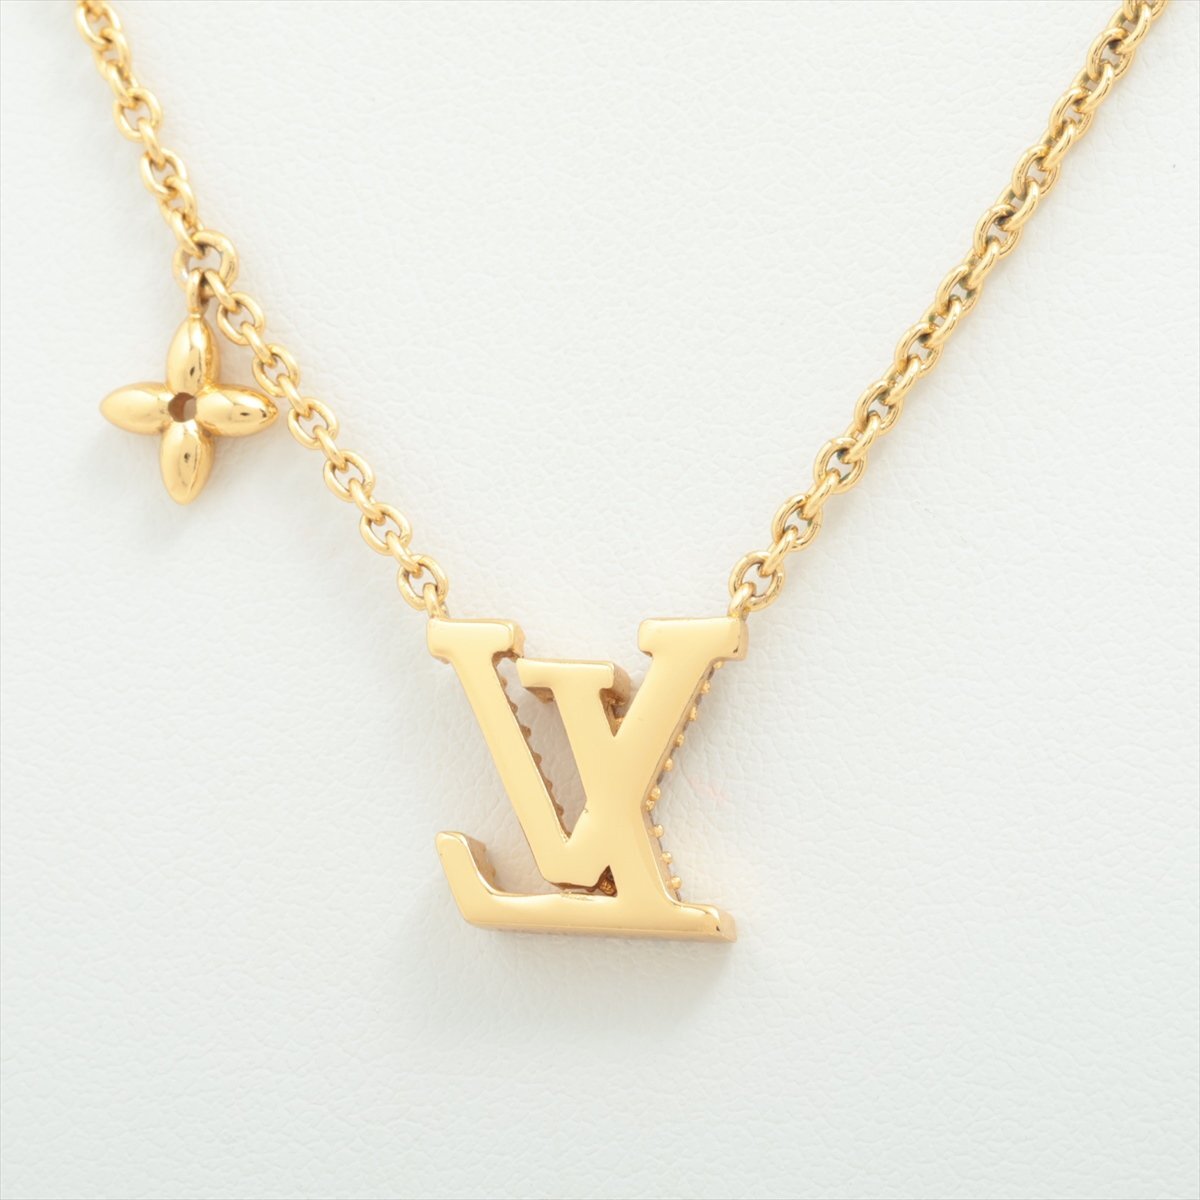 1 jpy Louis Vuitton kolieLV Aiko nikM00596 necklace Gold rhinestone pendant accessory lady's MMM K31-5